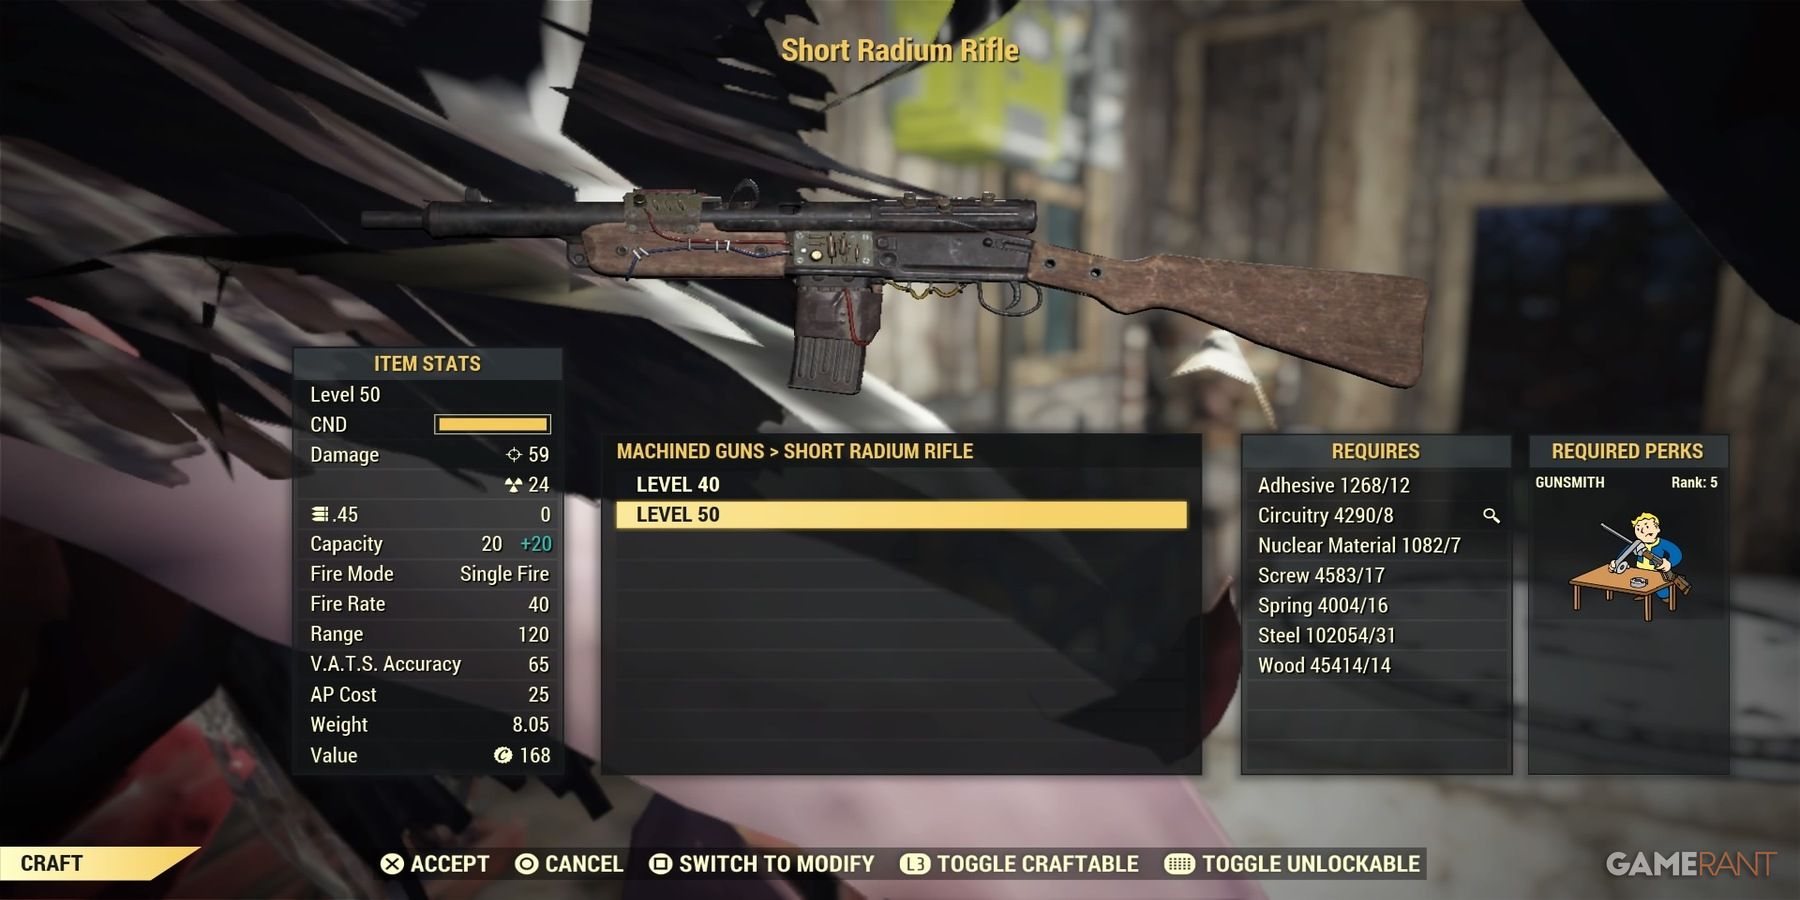 Short Radium Rifle in Fallout 76